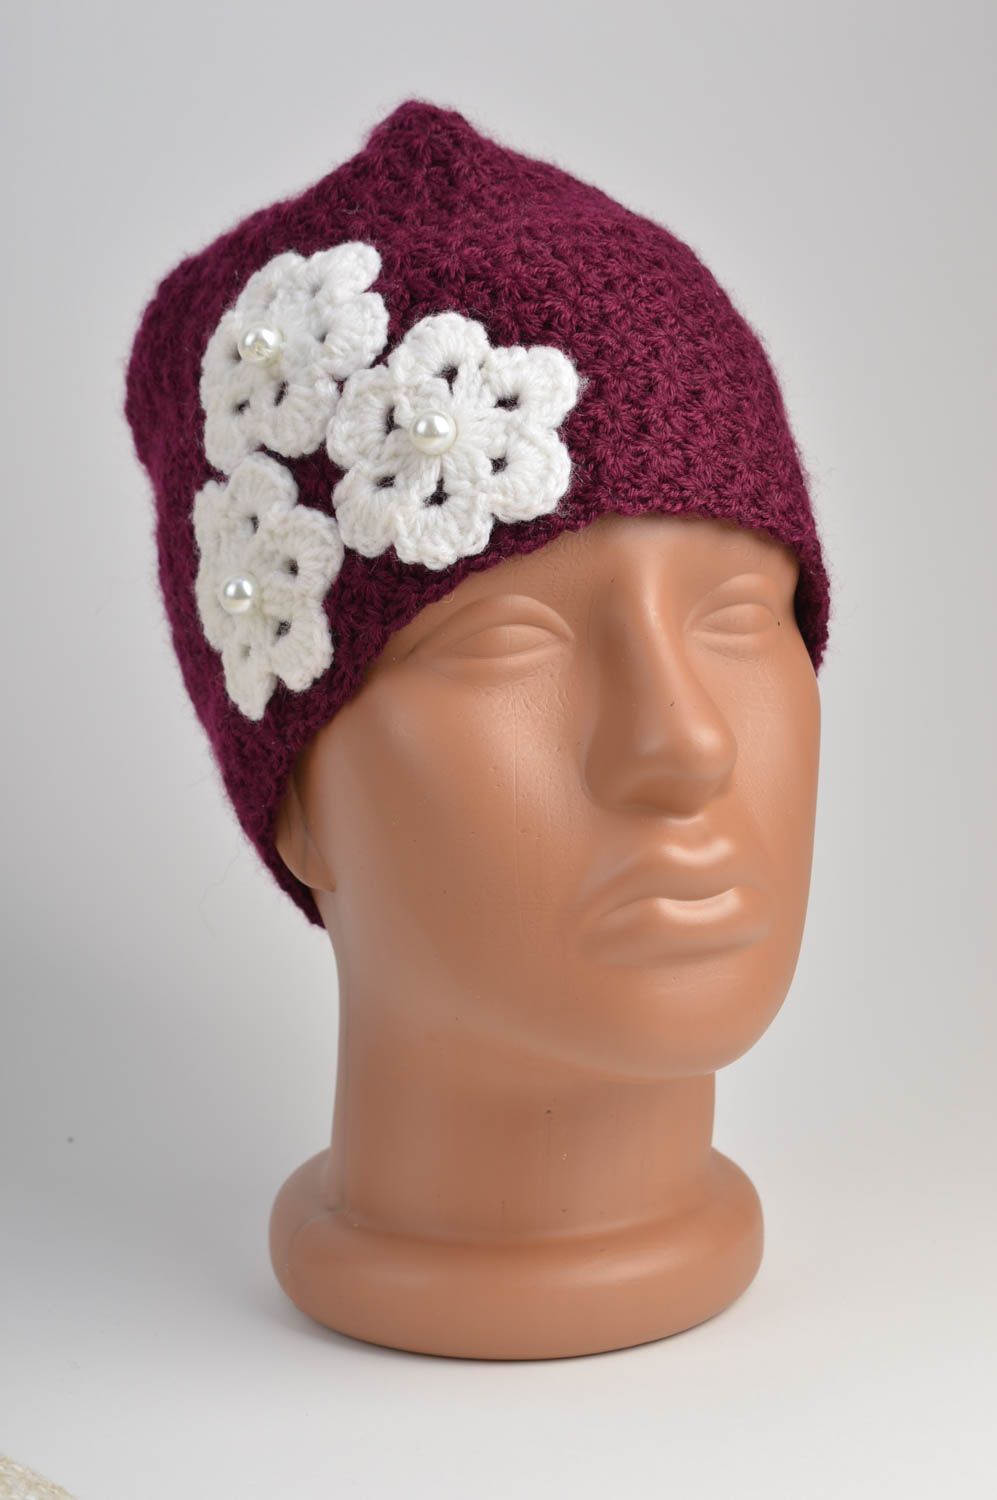 Зимняя шапка для девочки из полушерсти с цветами цвета бордо аксессуар хенд мейд фото 2